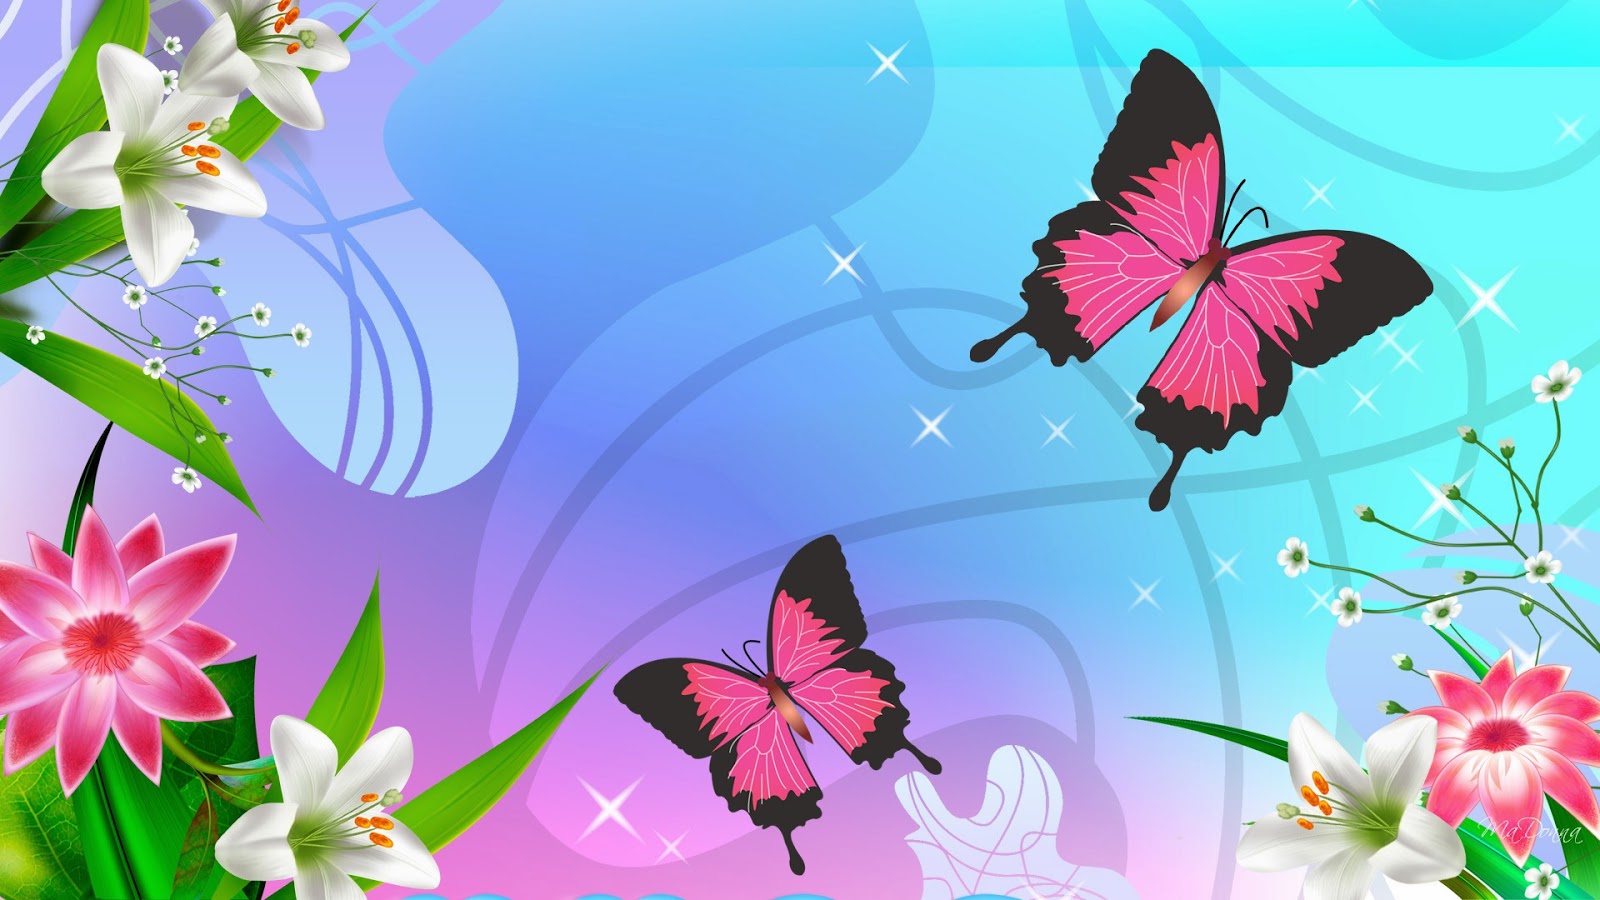  butterfly and flower wallpaper beautiful desktop wallpapers